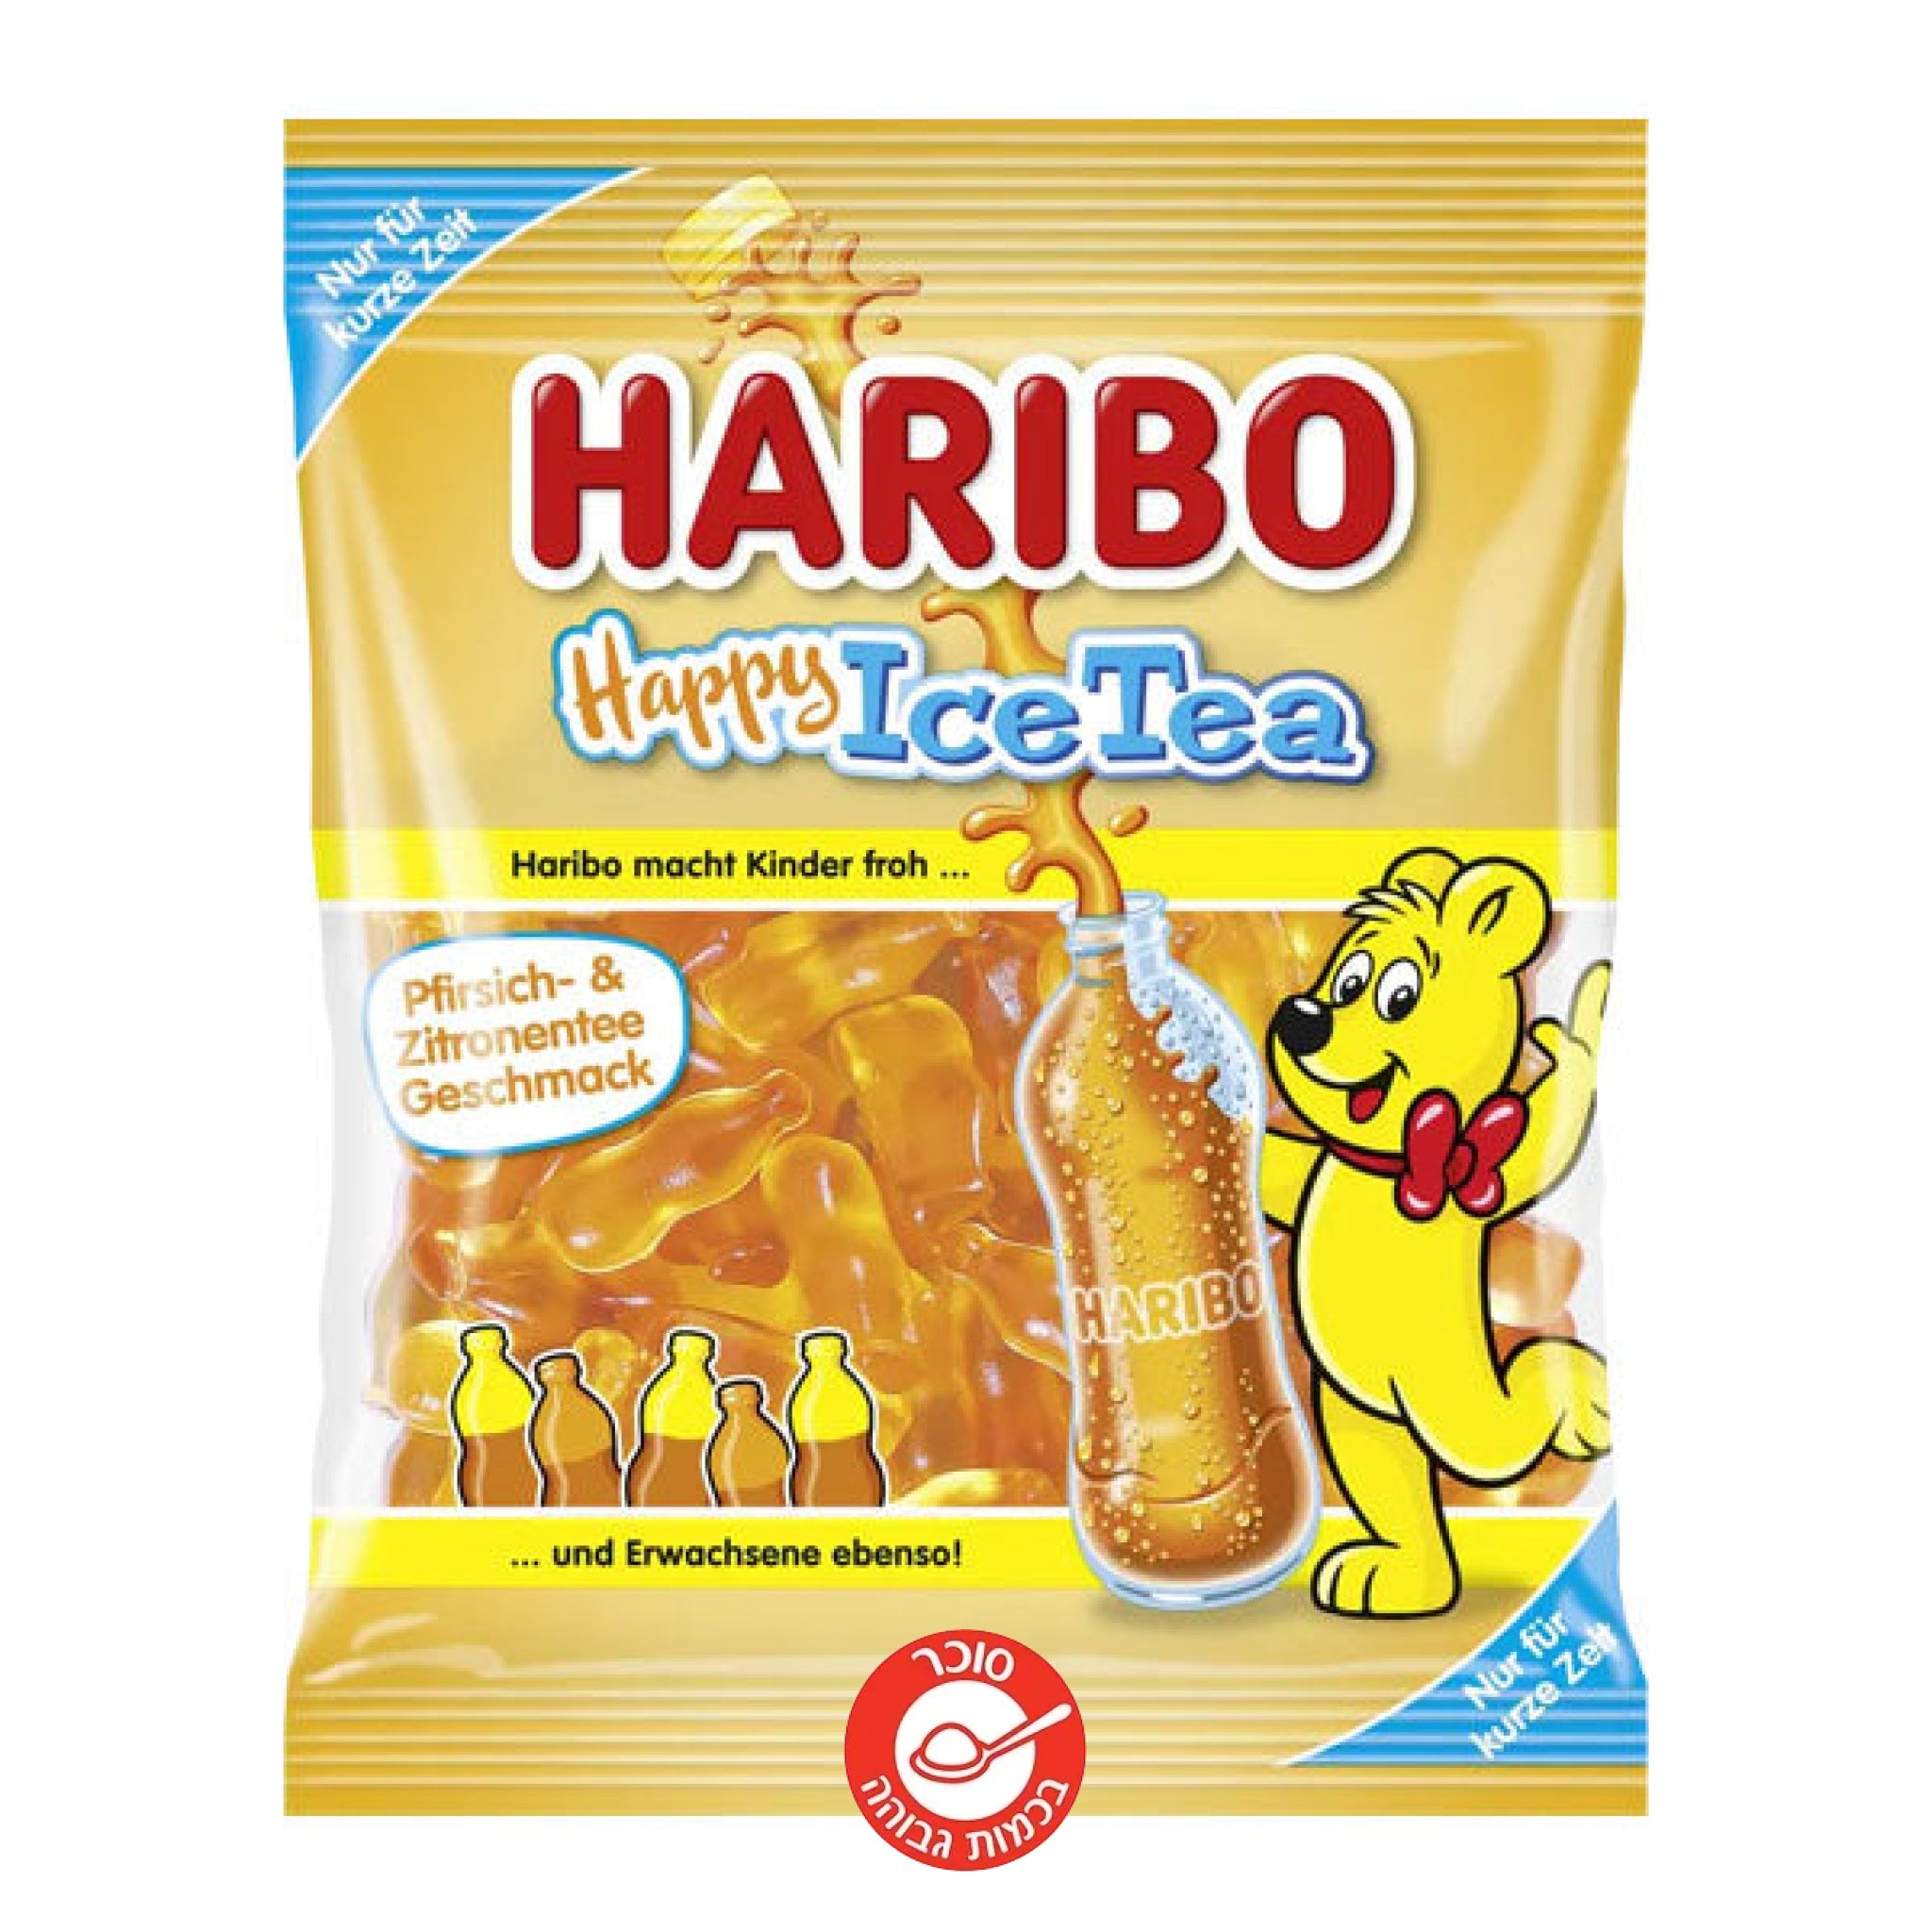 Haribo Ice Tea הריבו אייס טי דובוני גומי סוכריות